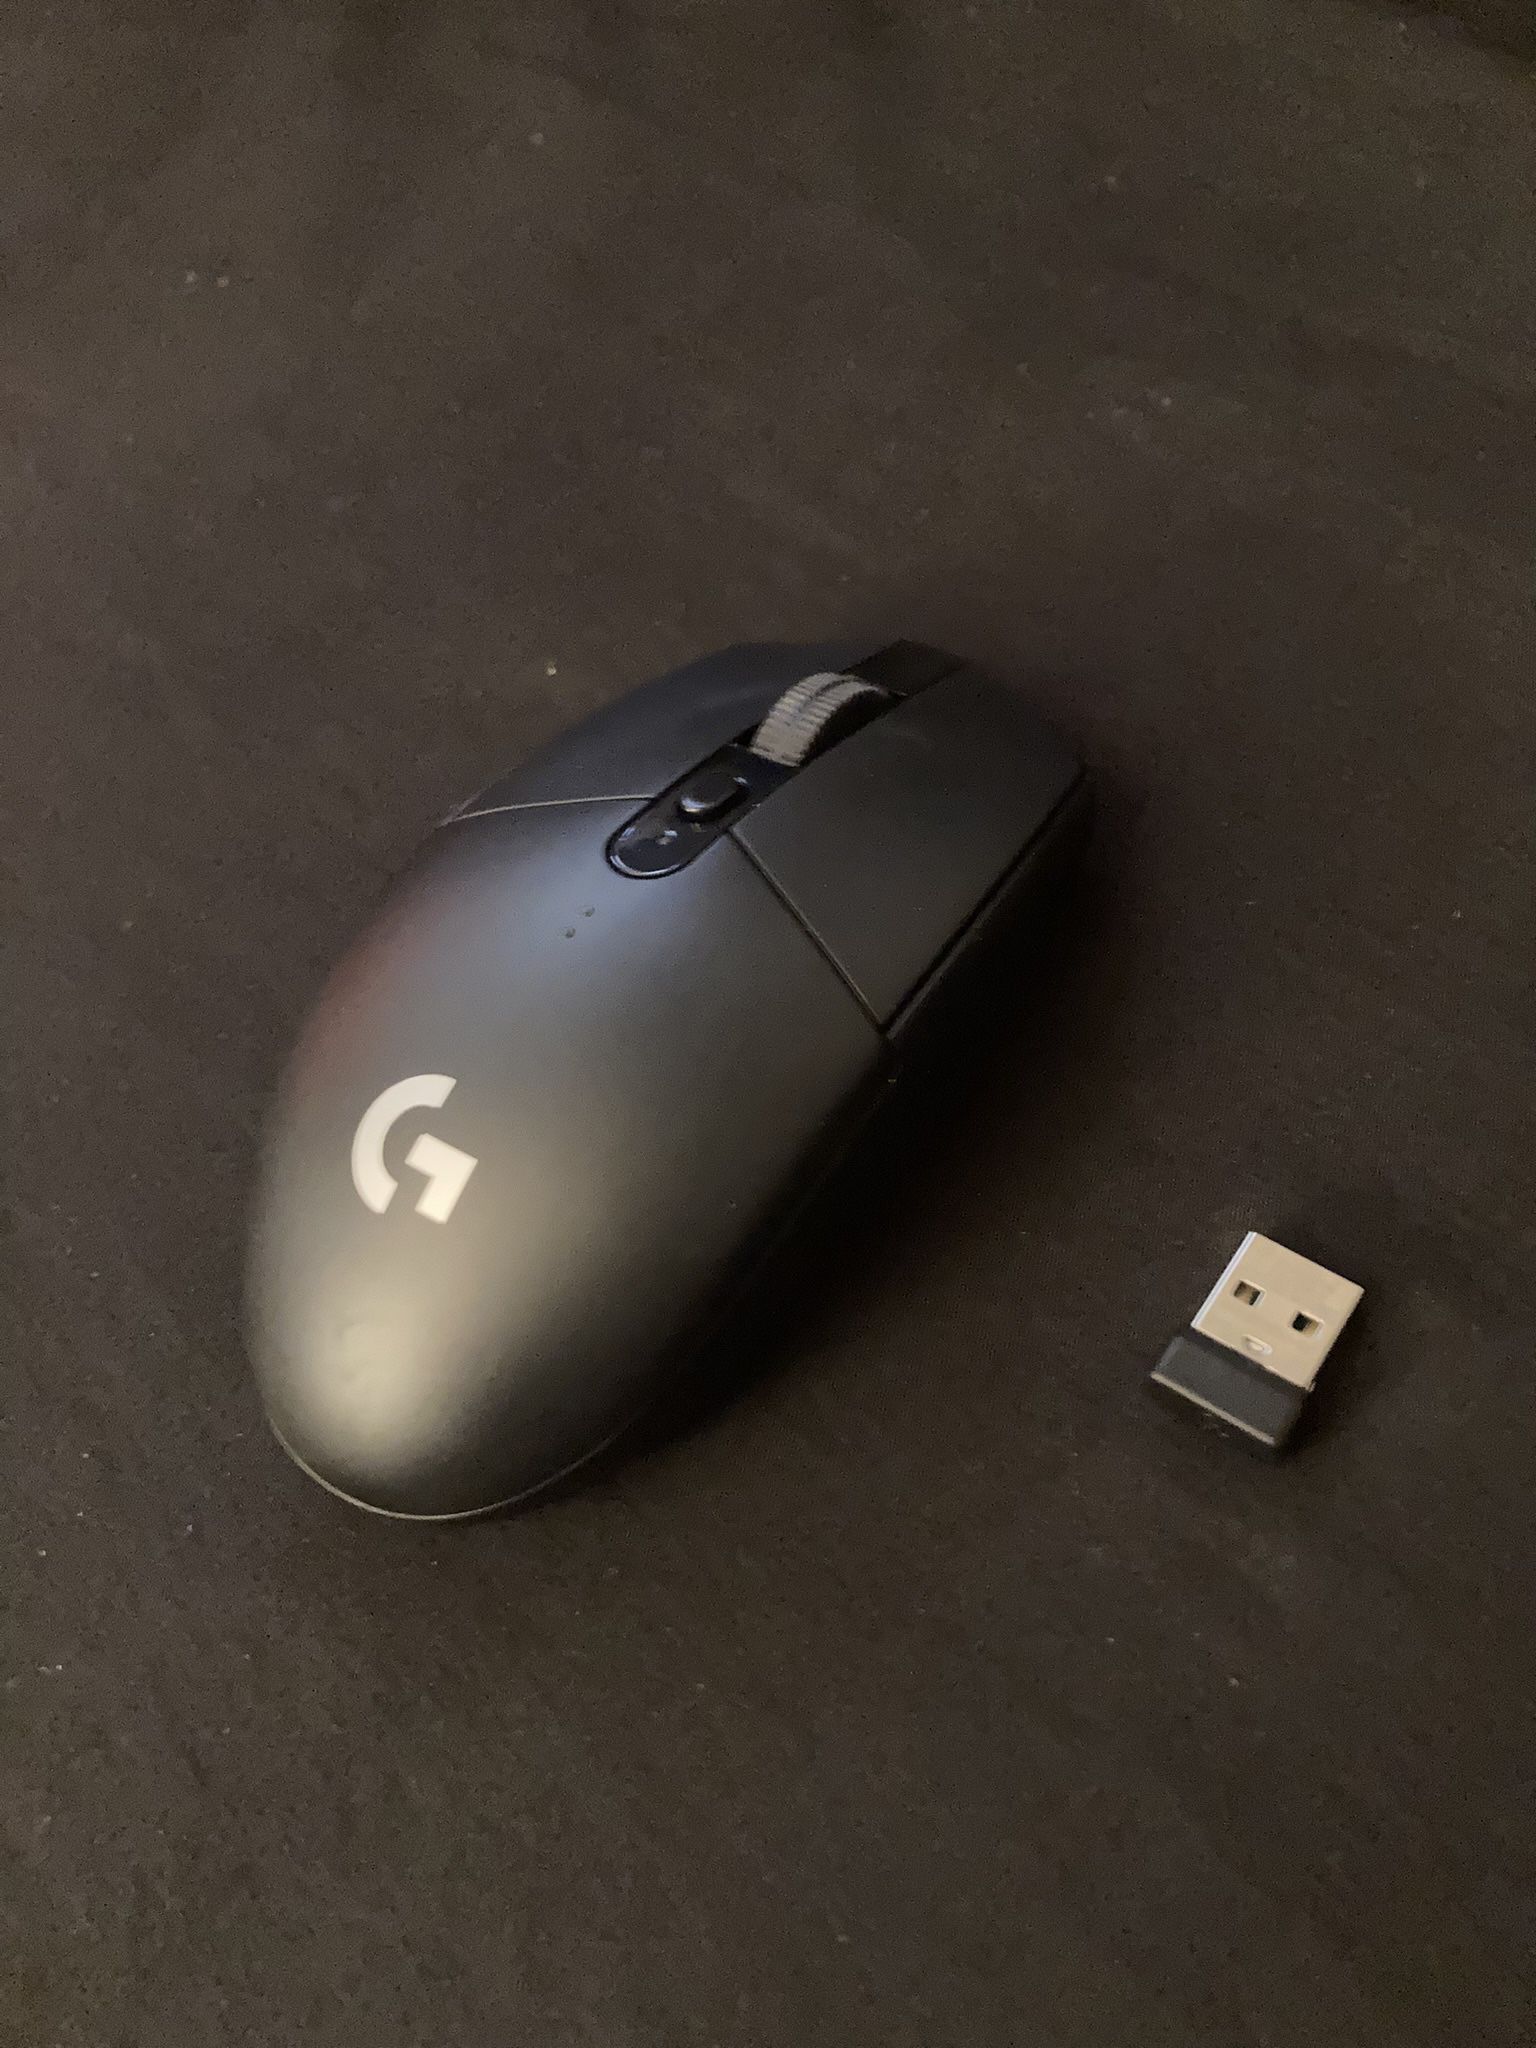 LOgitech G305 WIRELESS USB MOUSE LIKE NEW!